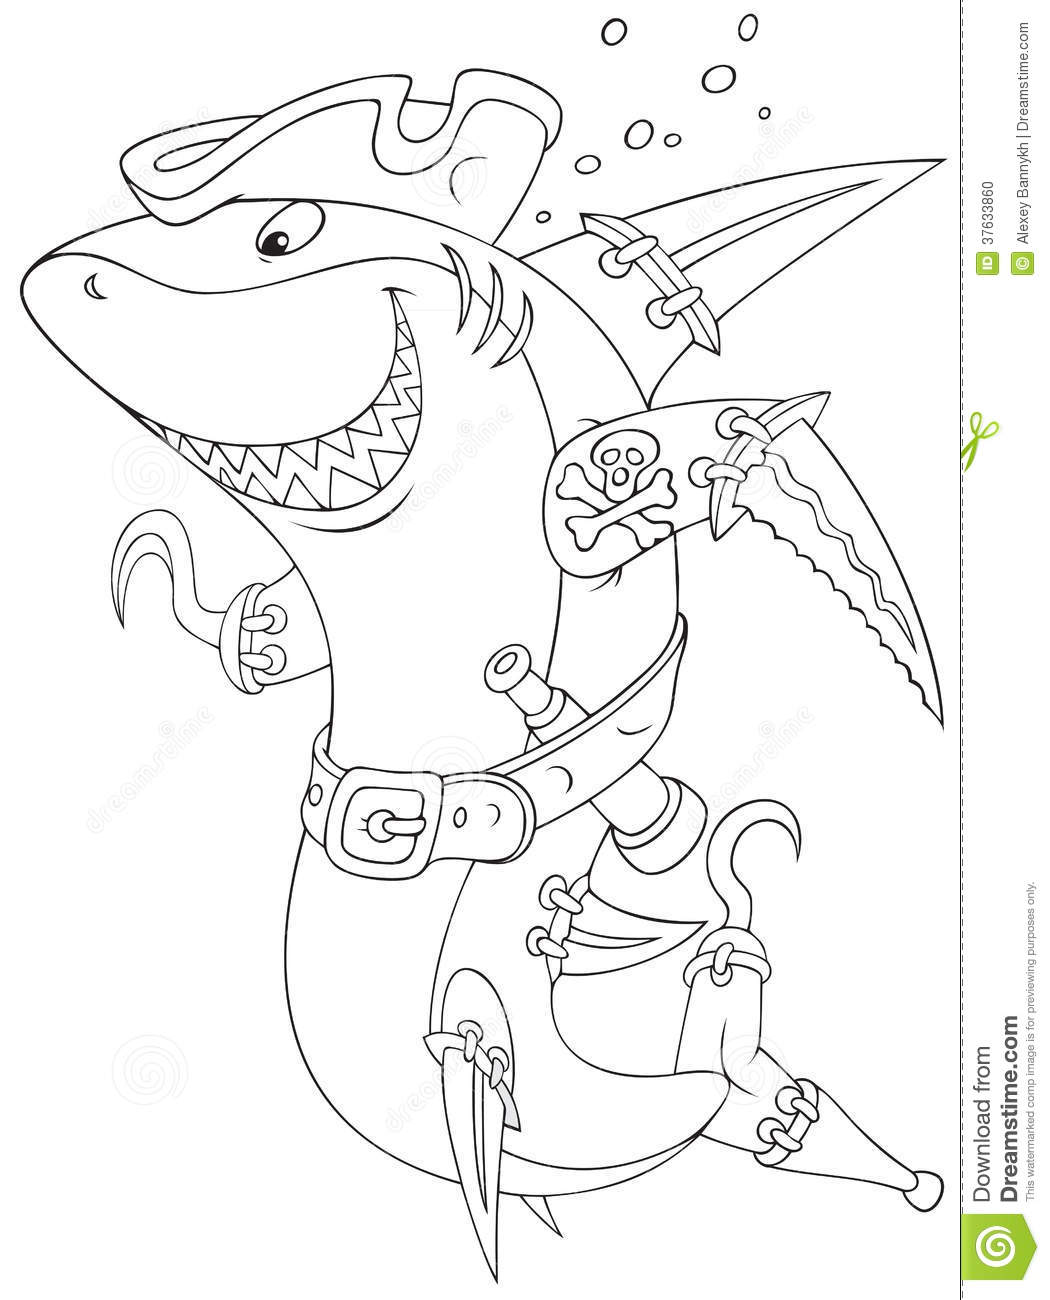 coloriage � dessiner requin marteau imprimer